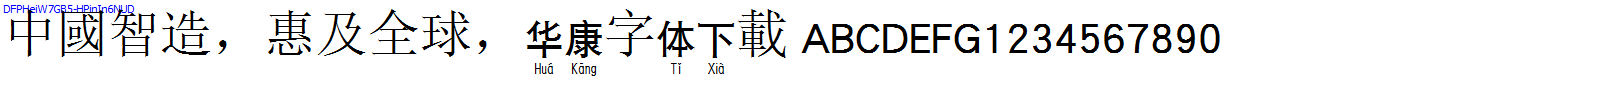 華康字體DFPHeiW7GB5-HPinIn6NUD.TTF